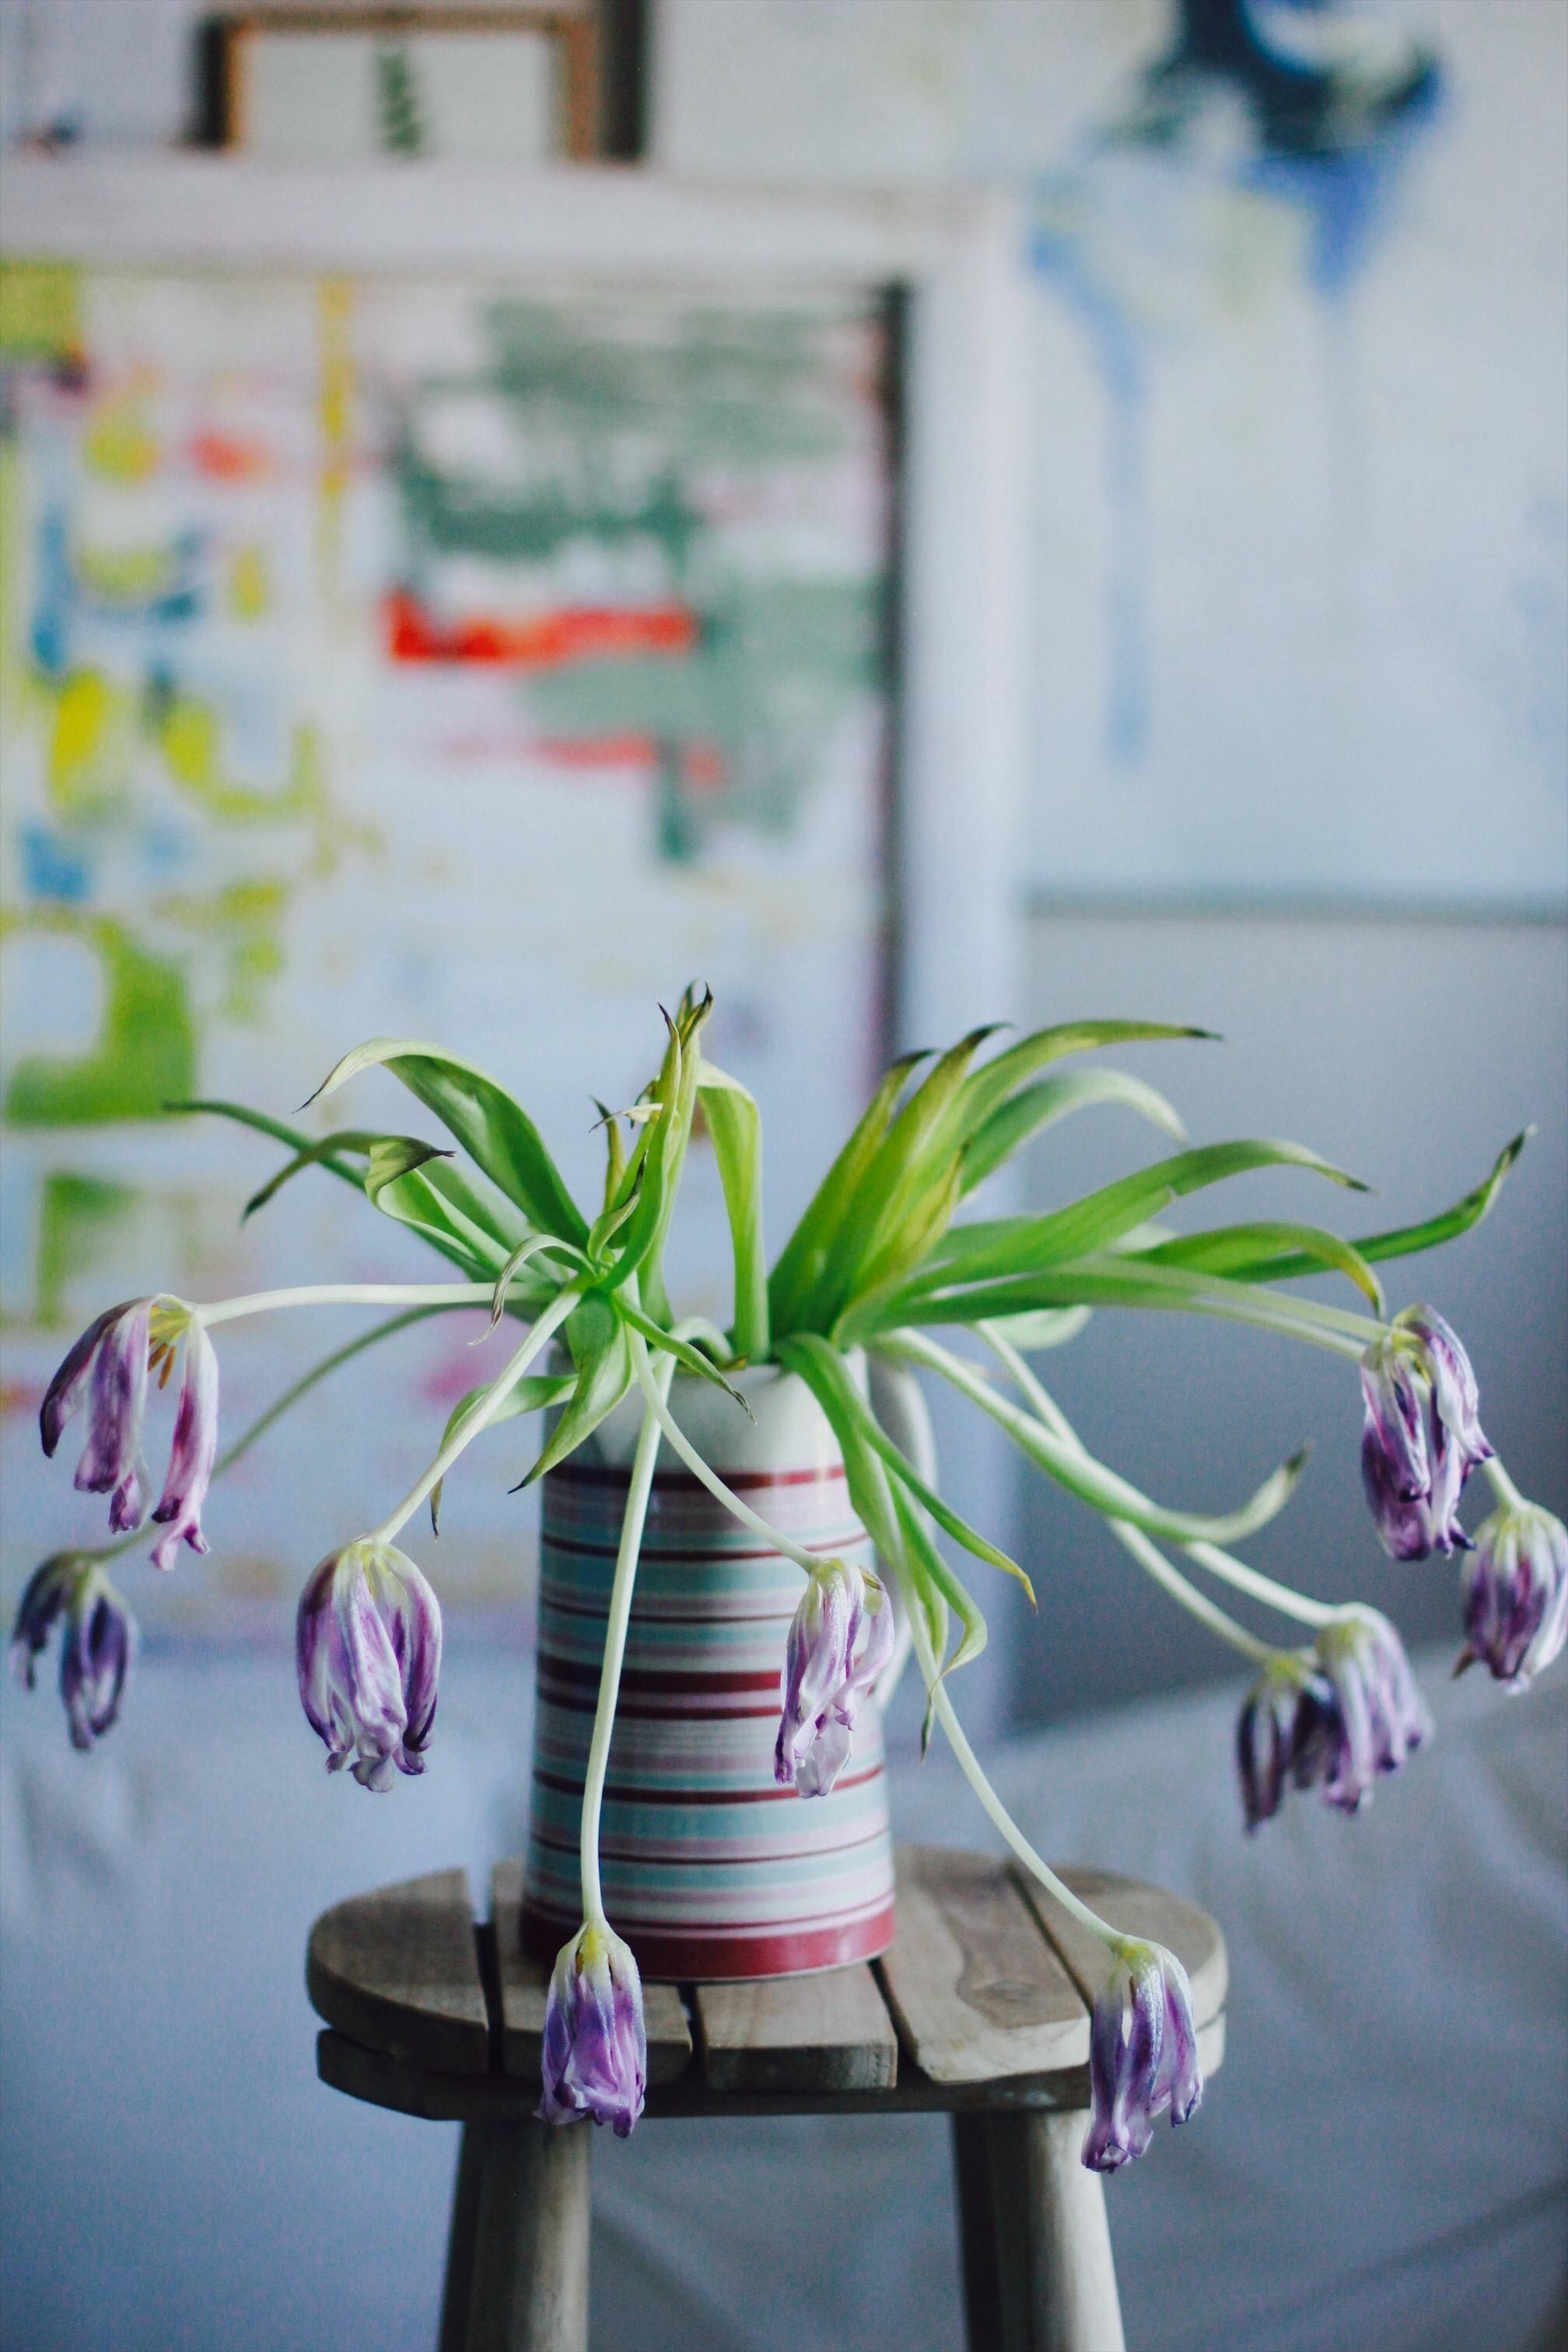 dying tulips are beautiful 😌
#tulpen#blumen#januar#couchlieb#couchstyle#deko#livingroom